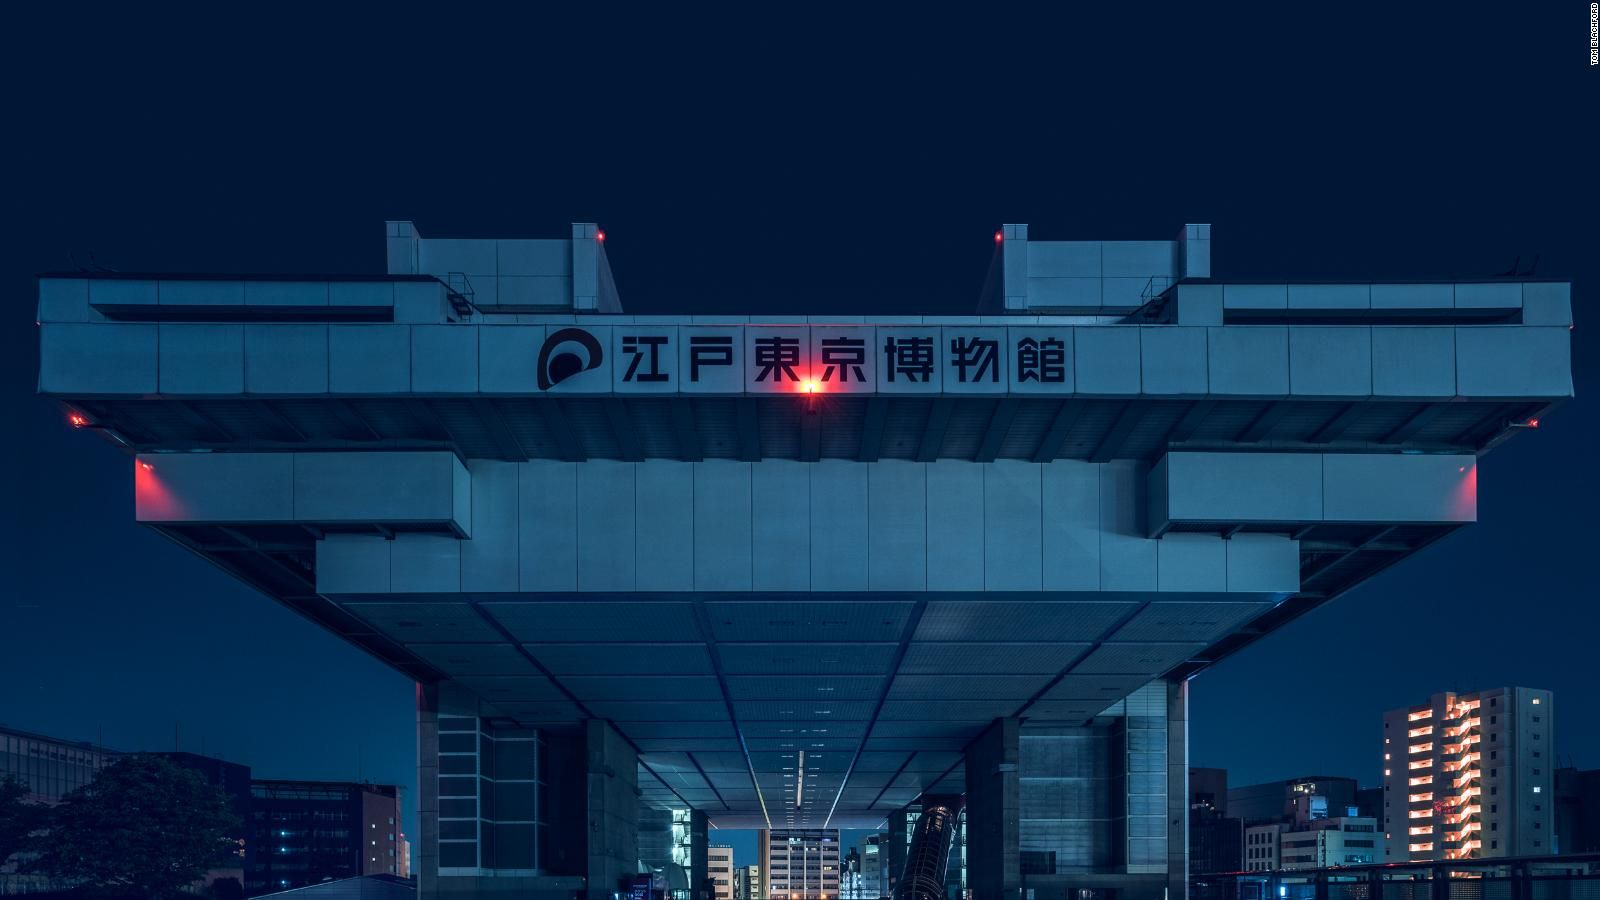 Night Photo That Make Tokyo Look Like A Sci Fi Utopia